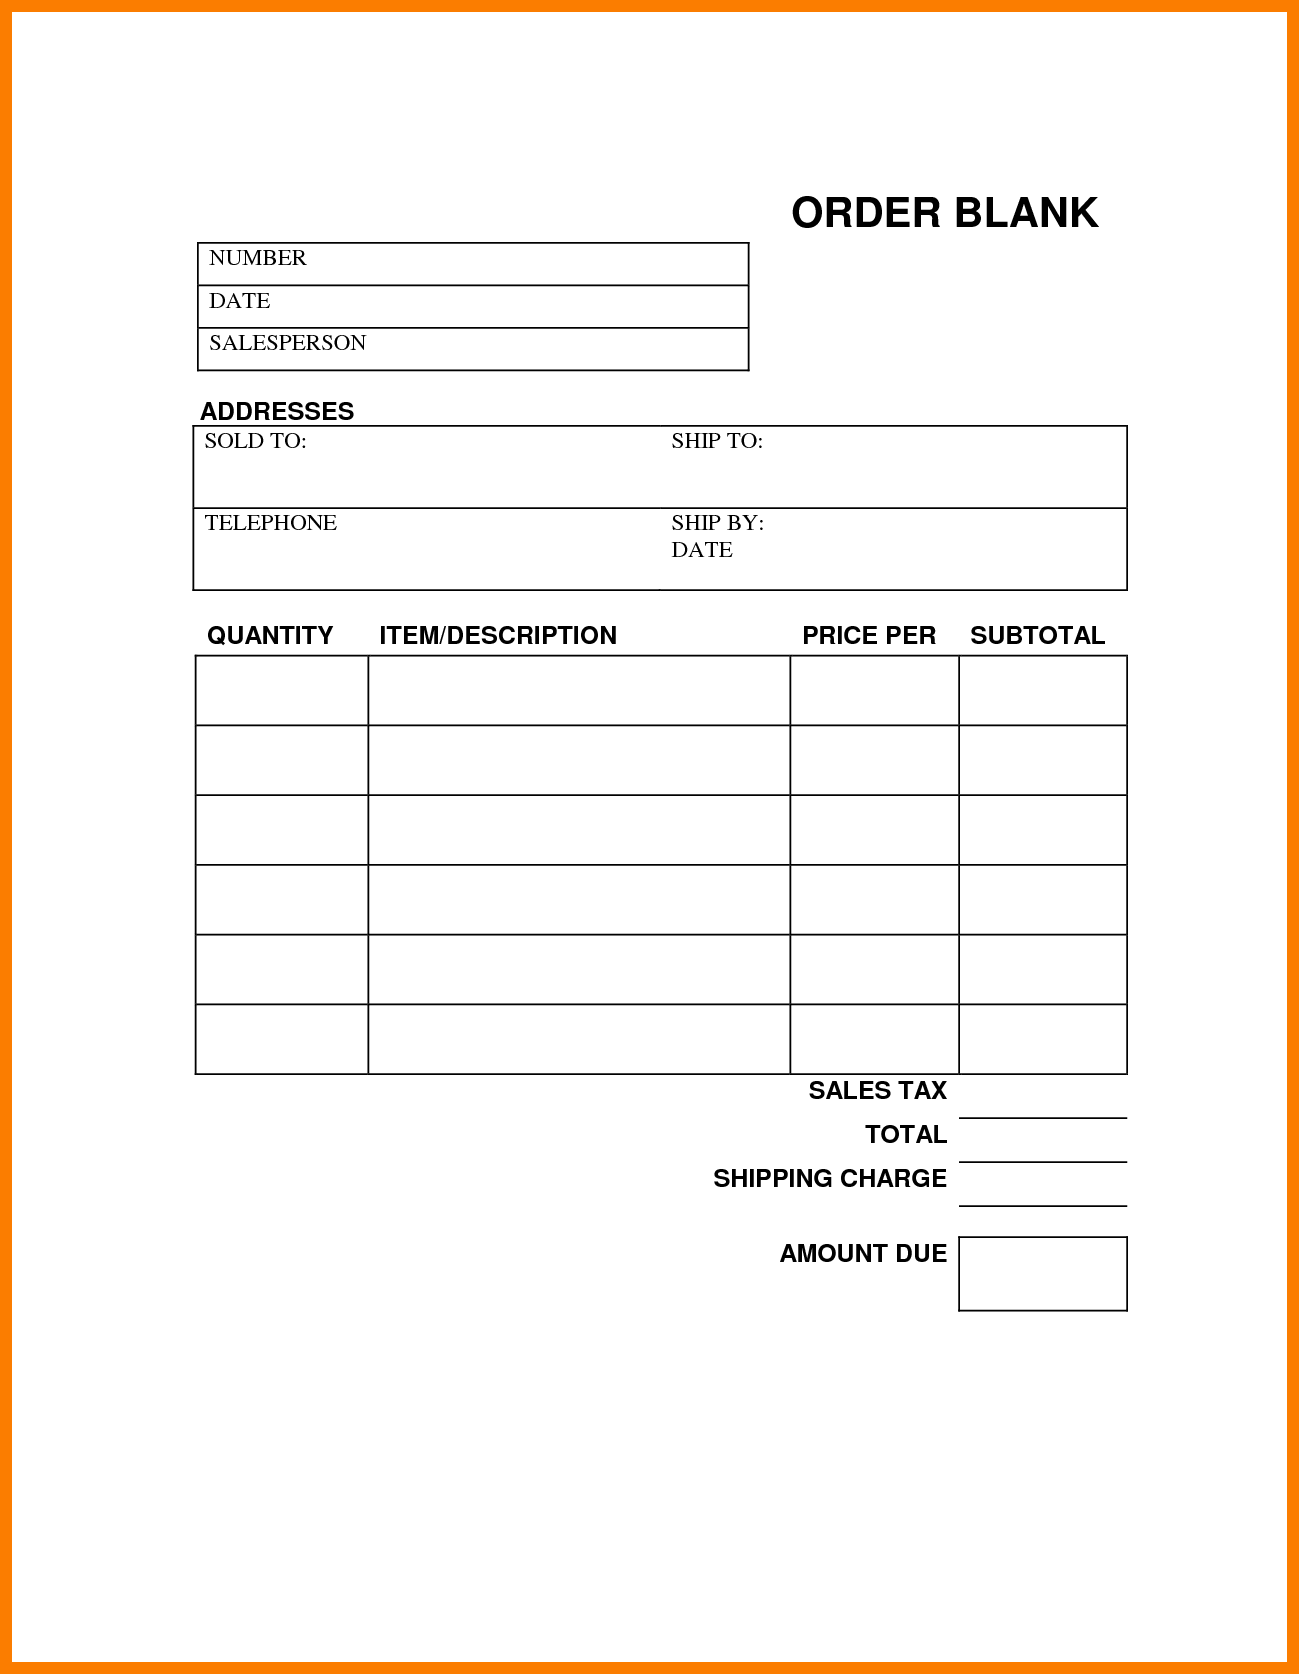 Printable Order Forms Free Printable Forms Free Online